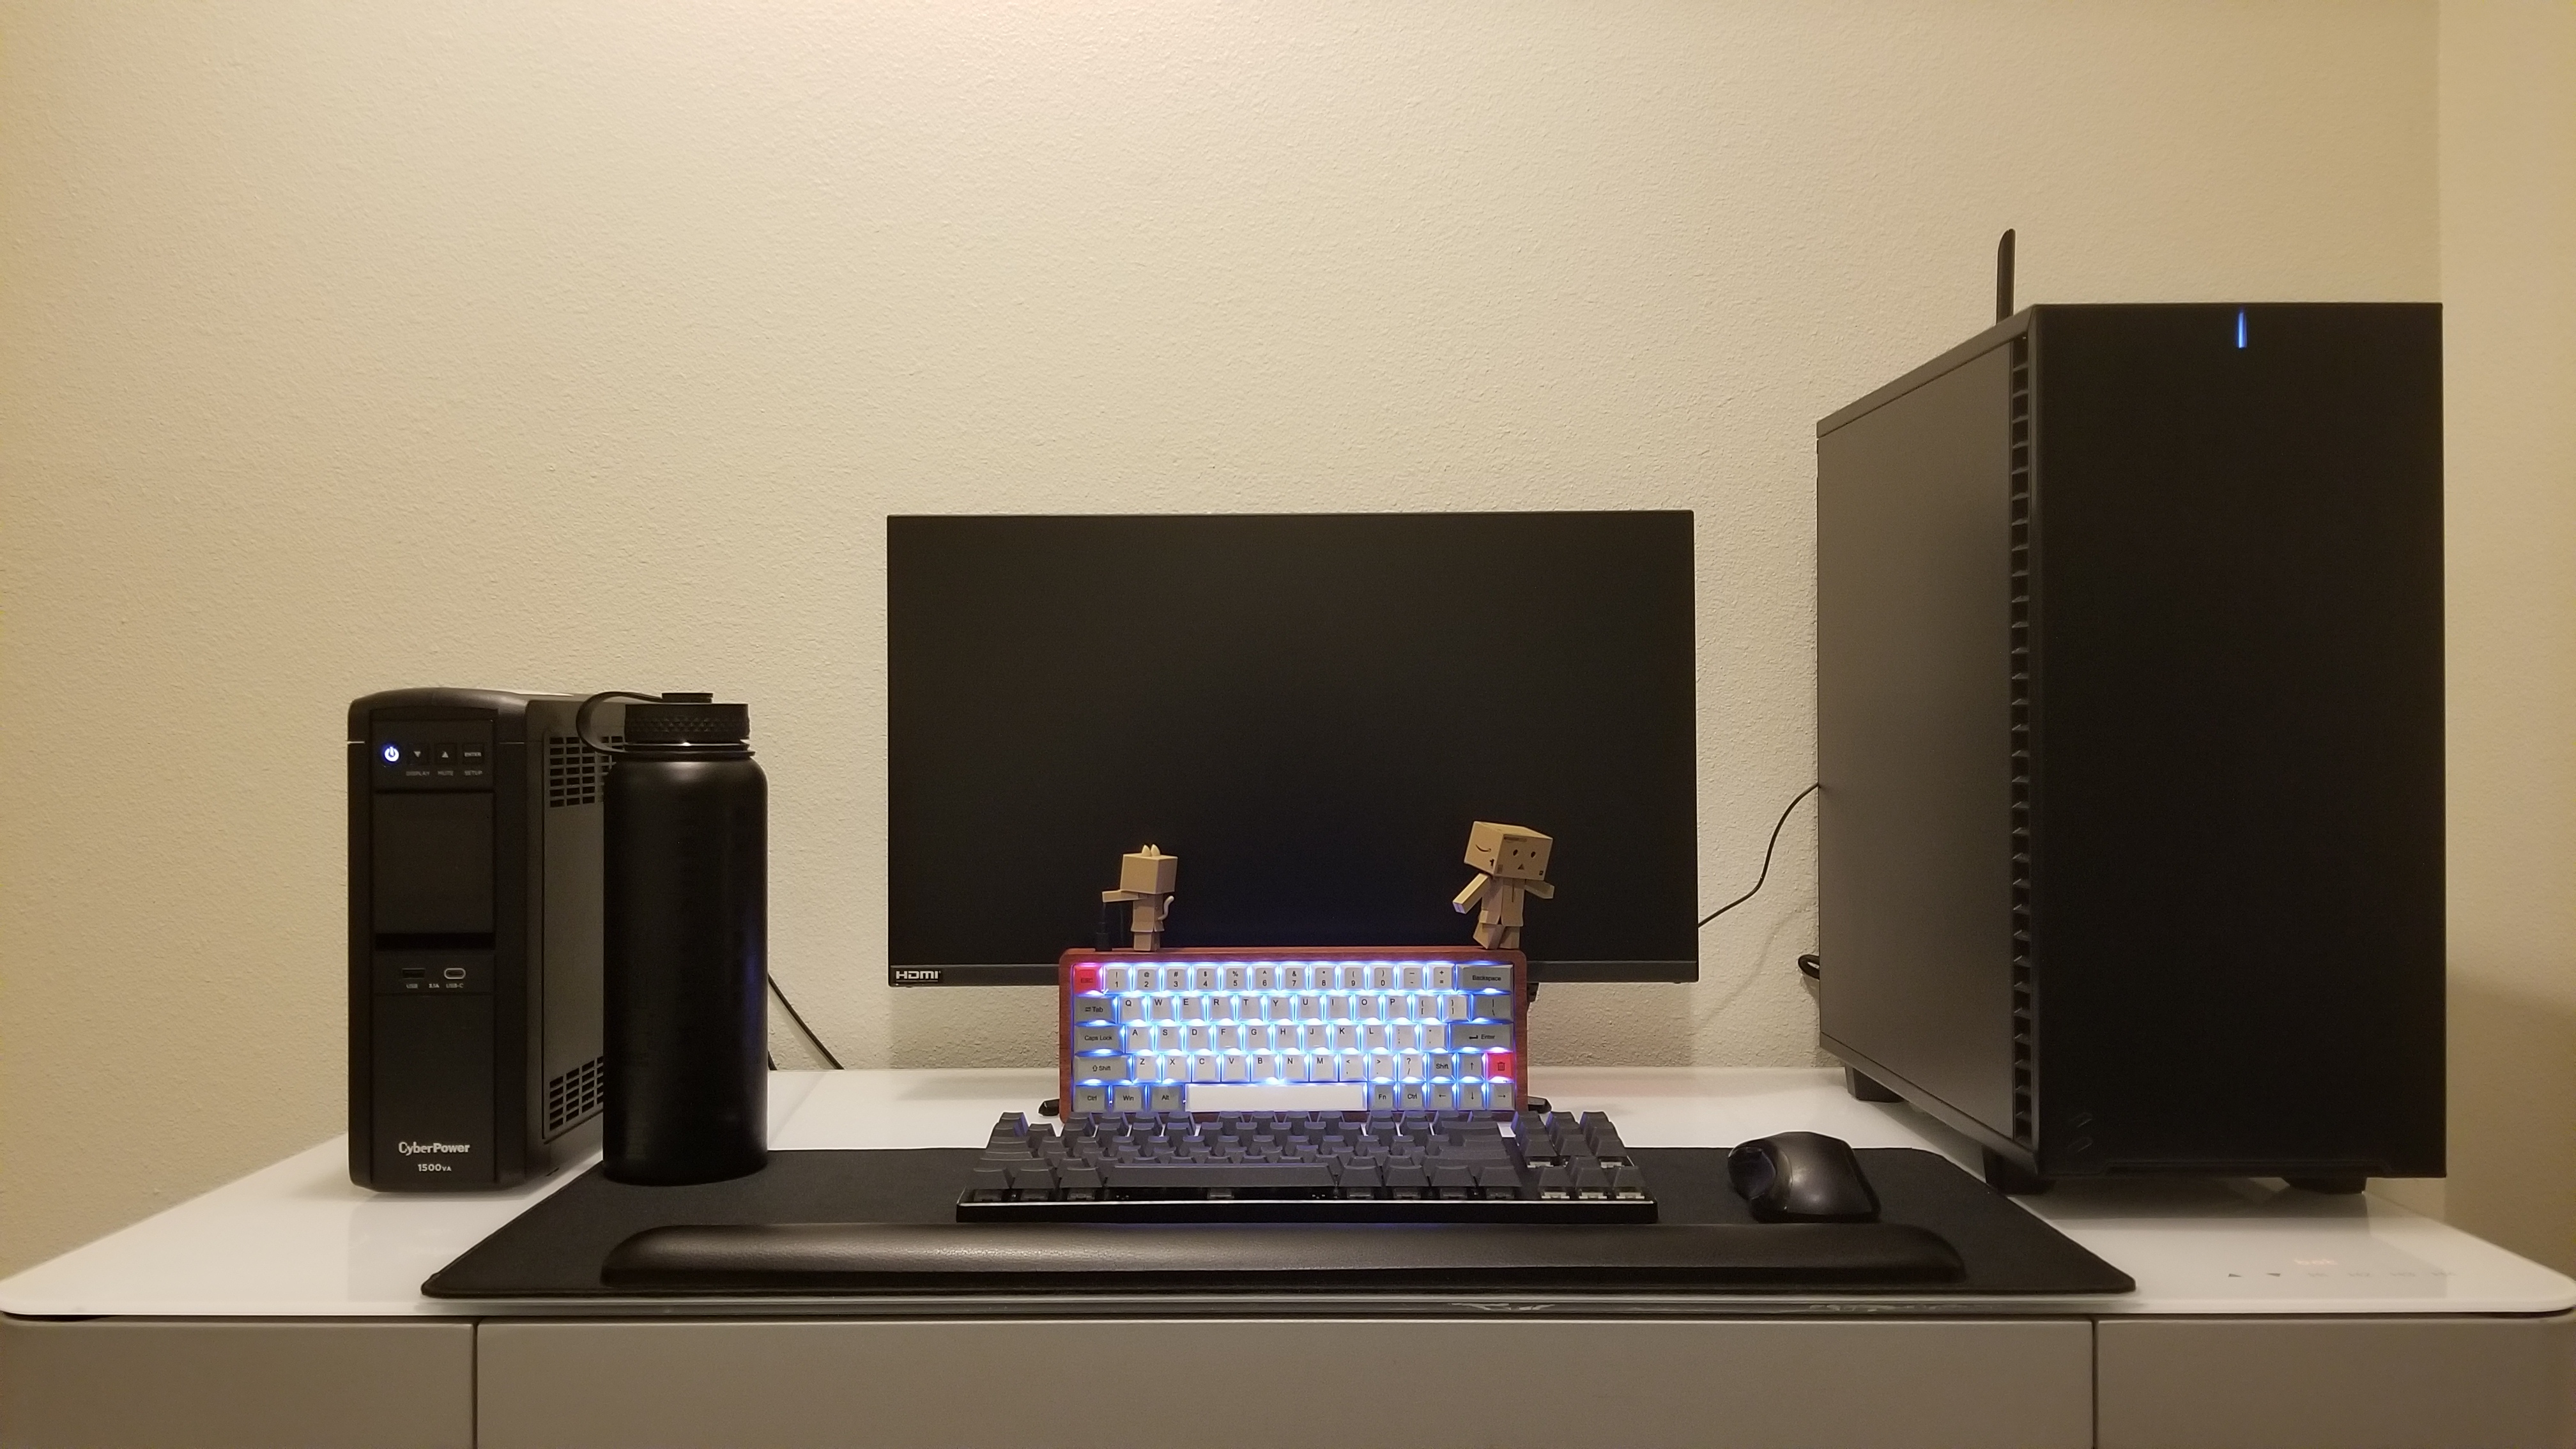 1 Desk 2 Keyboards